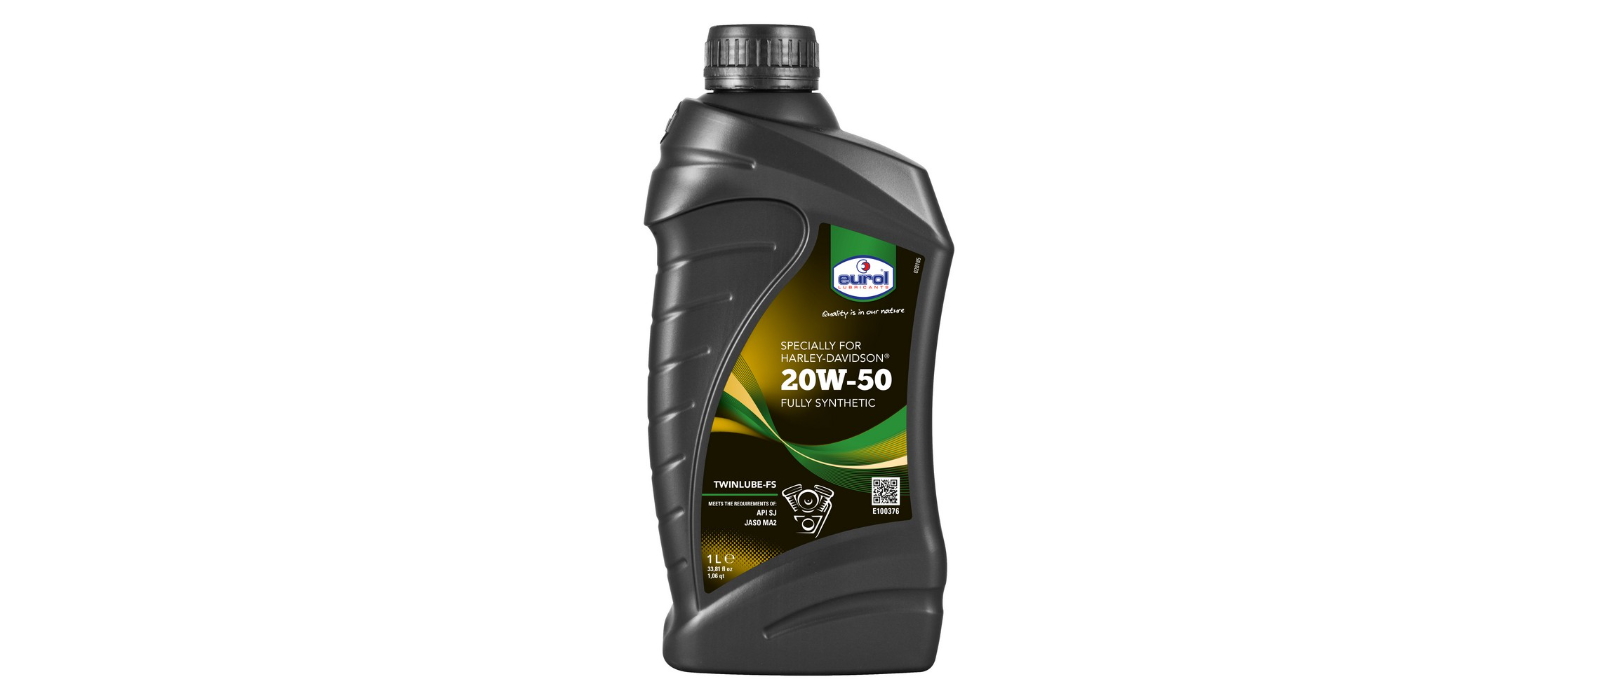 Моторное масло Eurol синтетическое HARLEY TWINLUBE-FS 20W50 1л